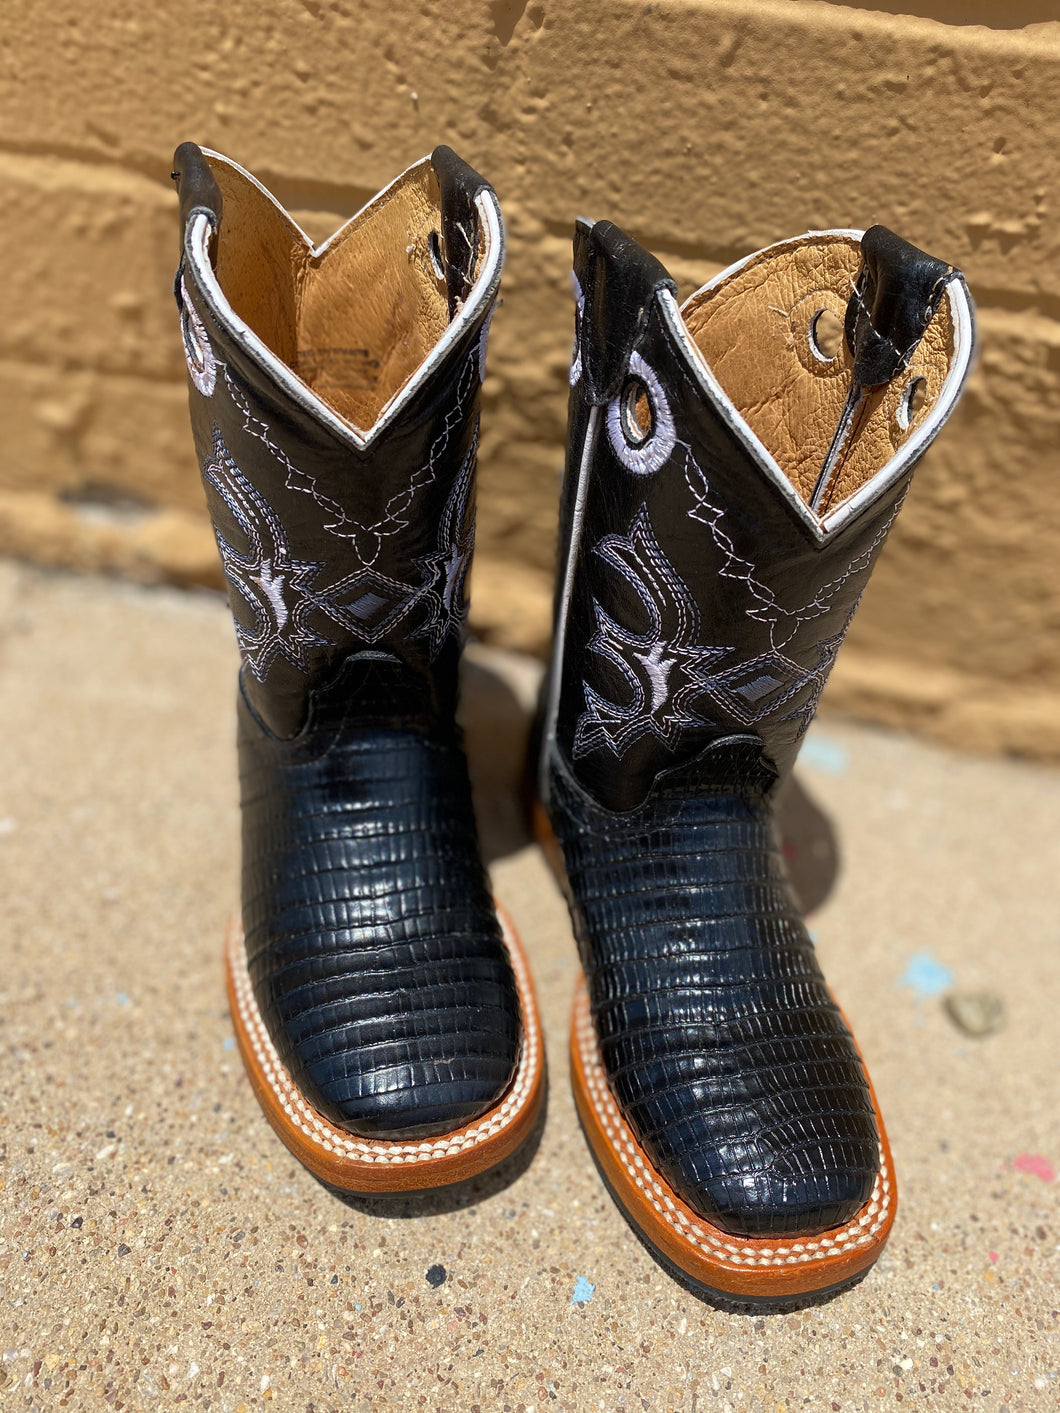 #9 Lizard Negro Denver Boys Square Toe Boots